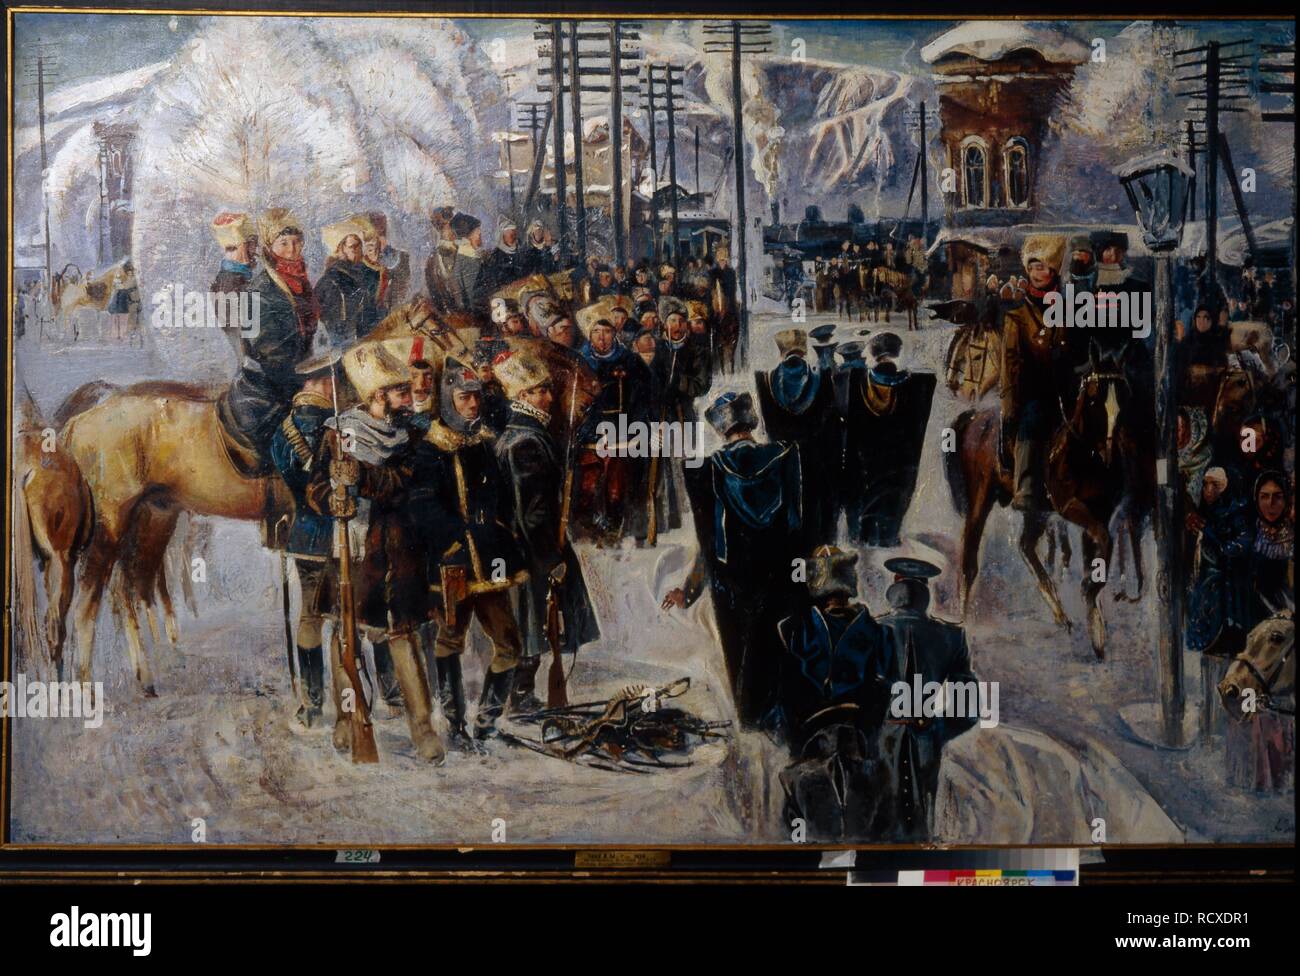 The End of the Admiral's Kolchak Army. Museum: State V. Surikov Art Museum, Krasnoyarsk. Author: Znak, Anatoli Markovich. Stock Photo